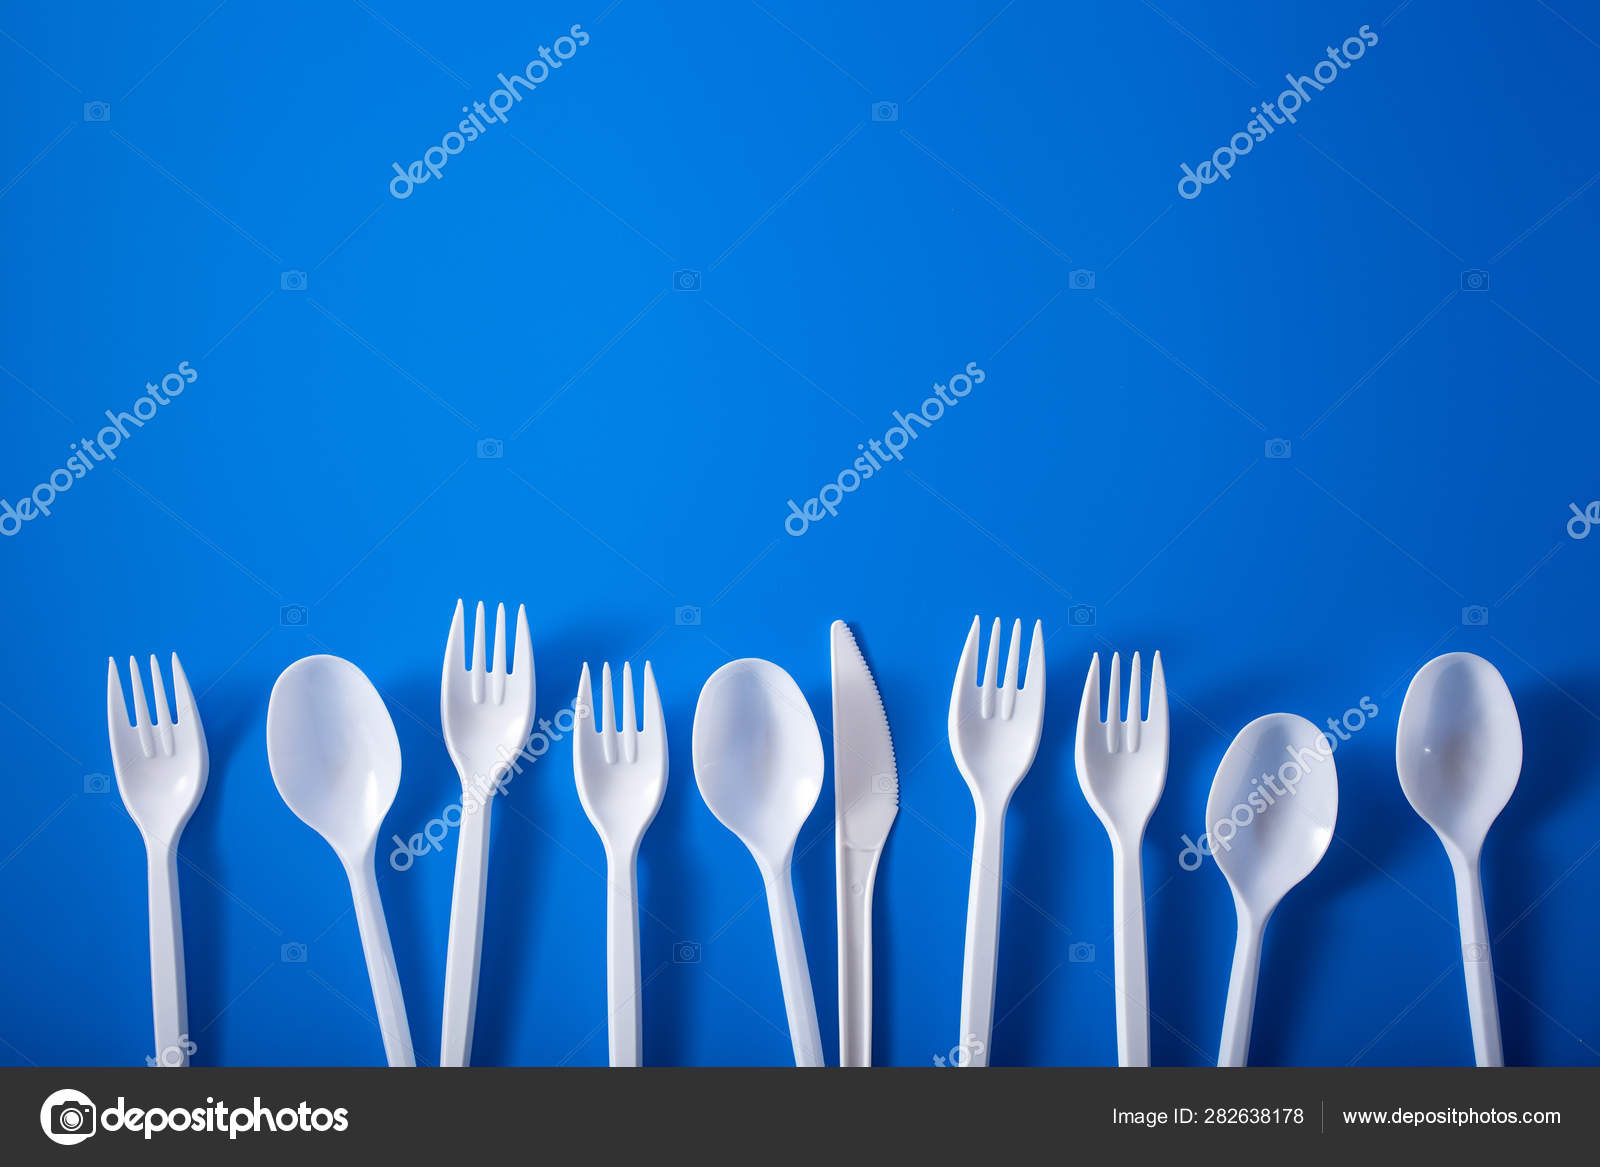 https://st4.depositphotos.com/1001944/28263/i/1600/depositphotos_282638178-stock-photo-single-use-plastic-forks-spoons.jpg